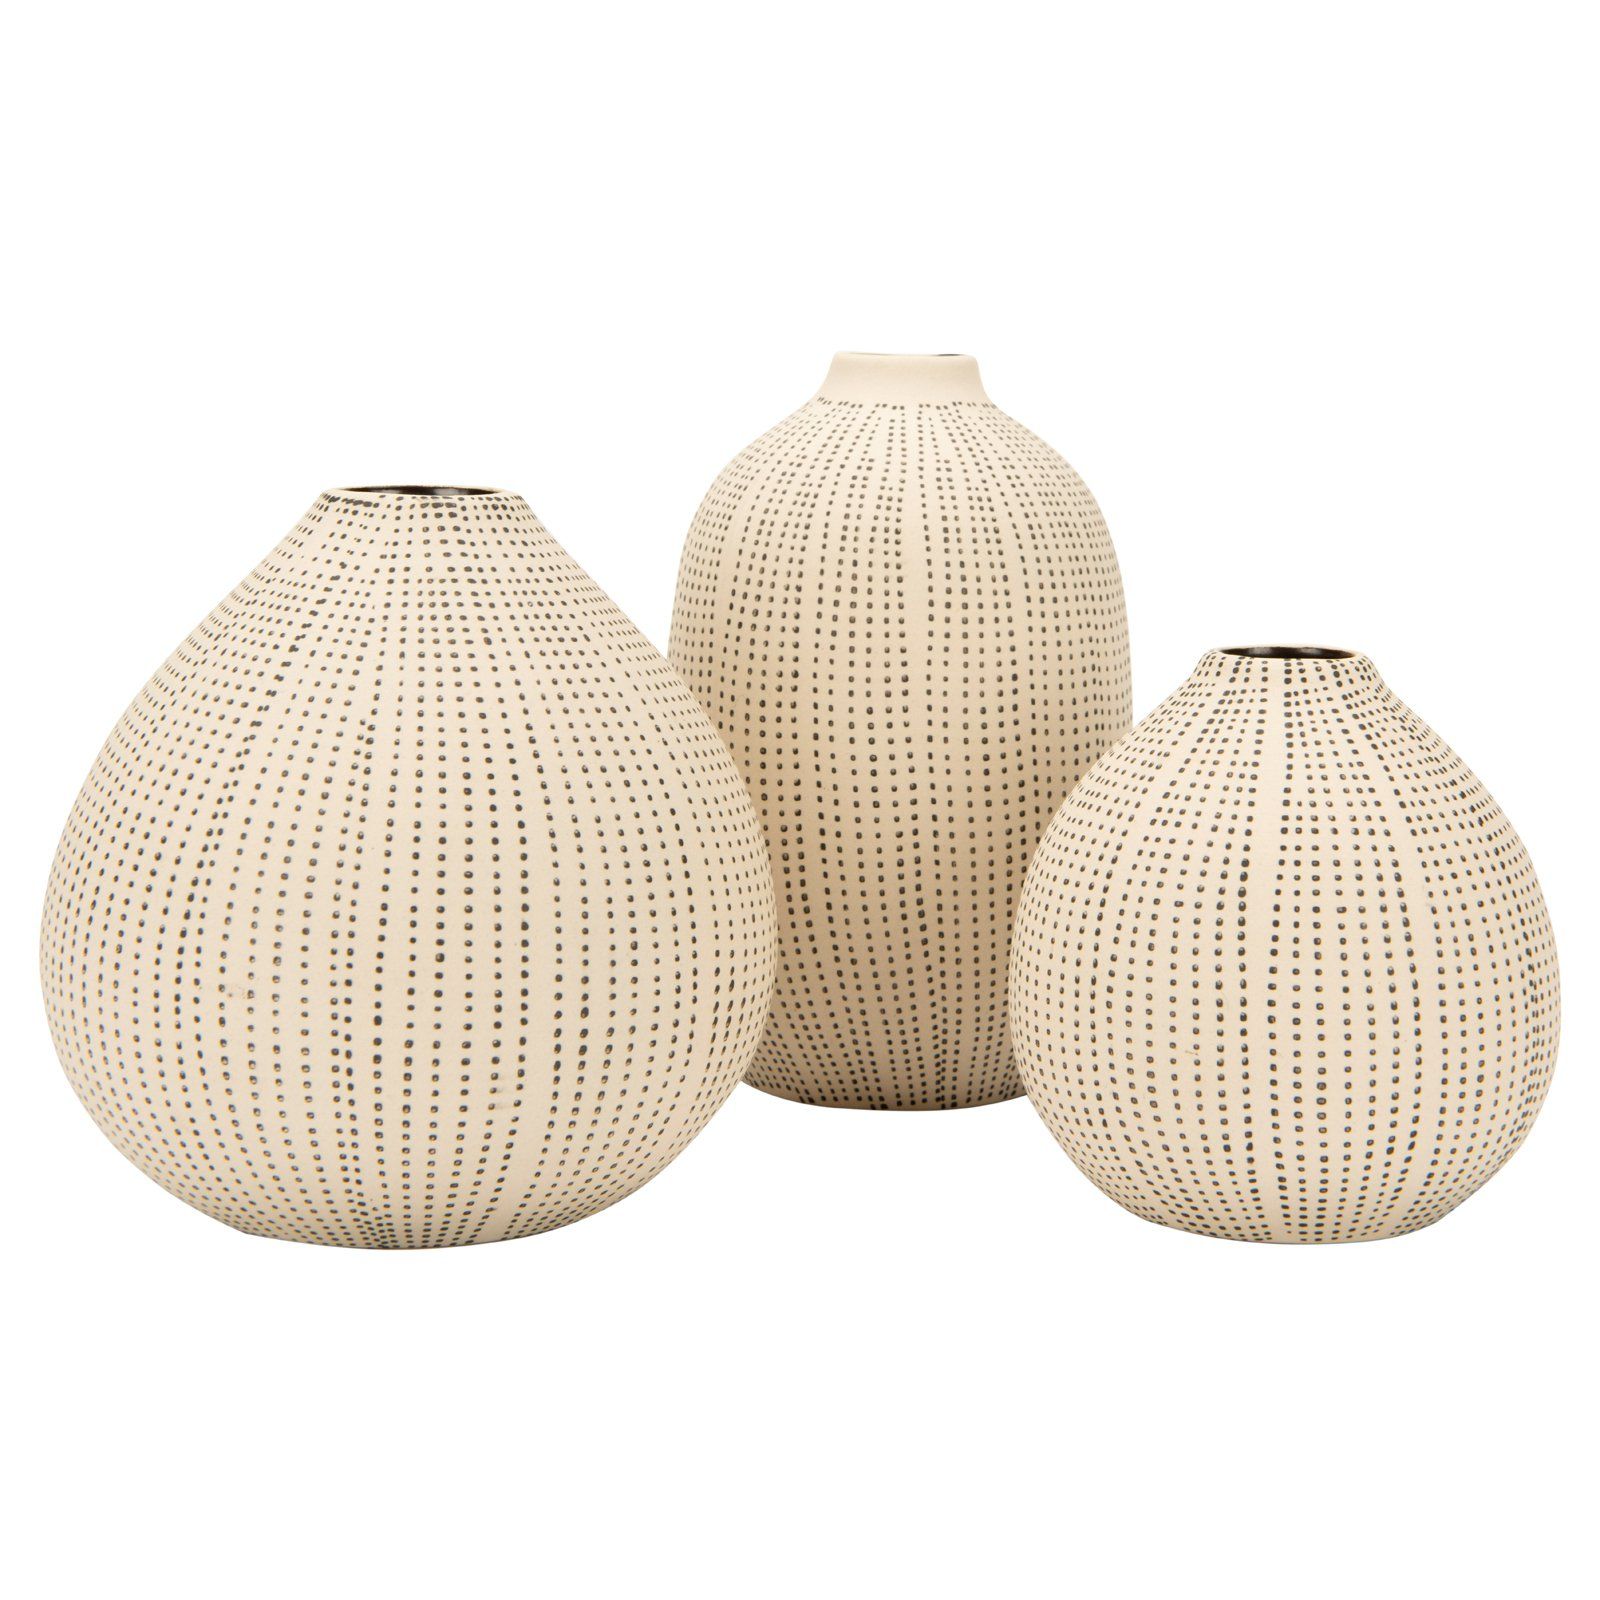 3R Studios White Stoneware Vases with Textured Black Polka Dots - Set of 3 | Walmart (US)